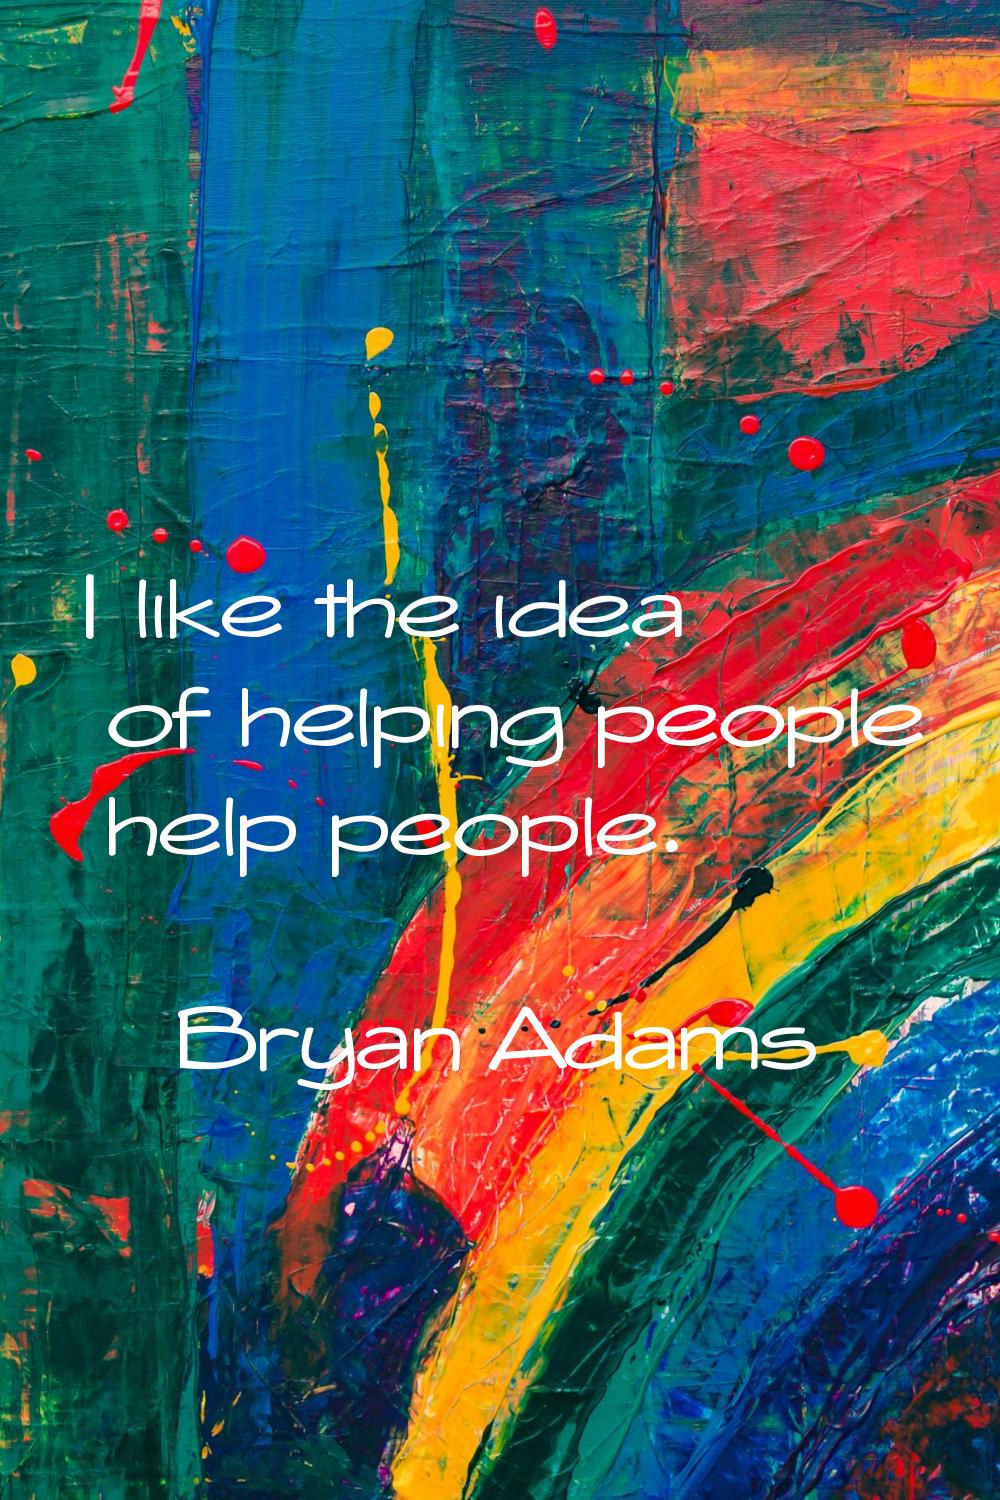 I like the idea of helping people help people.